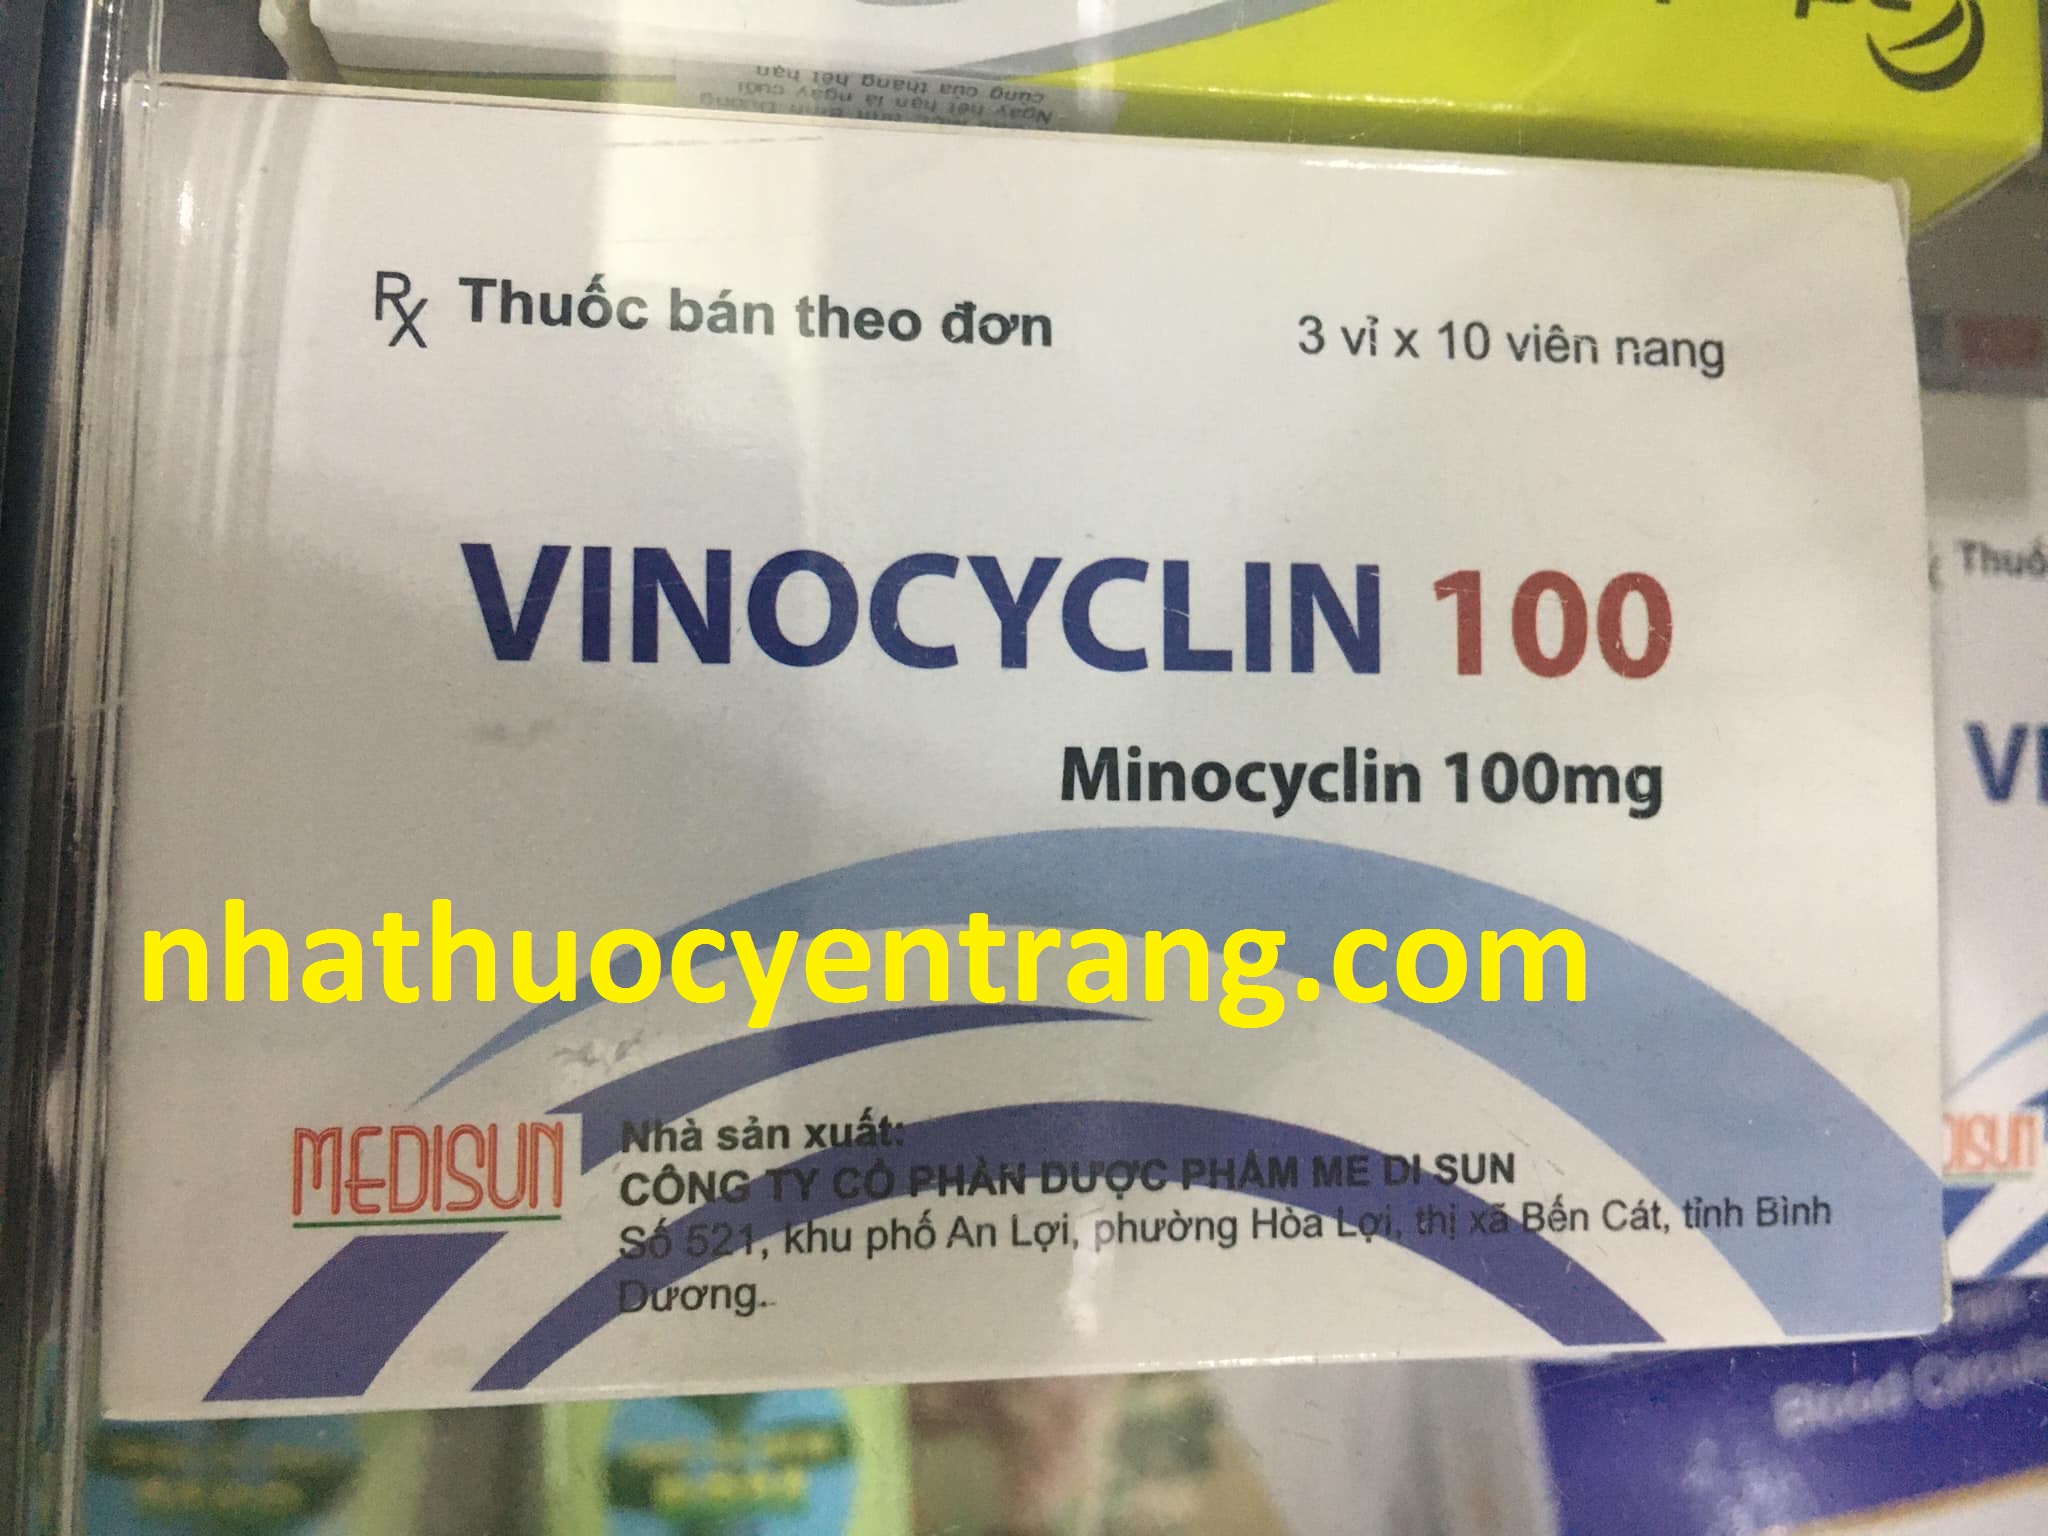 Vinocyclin 100mg